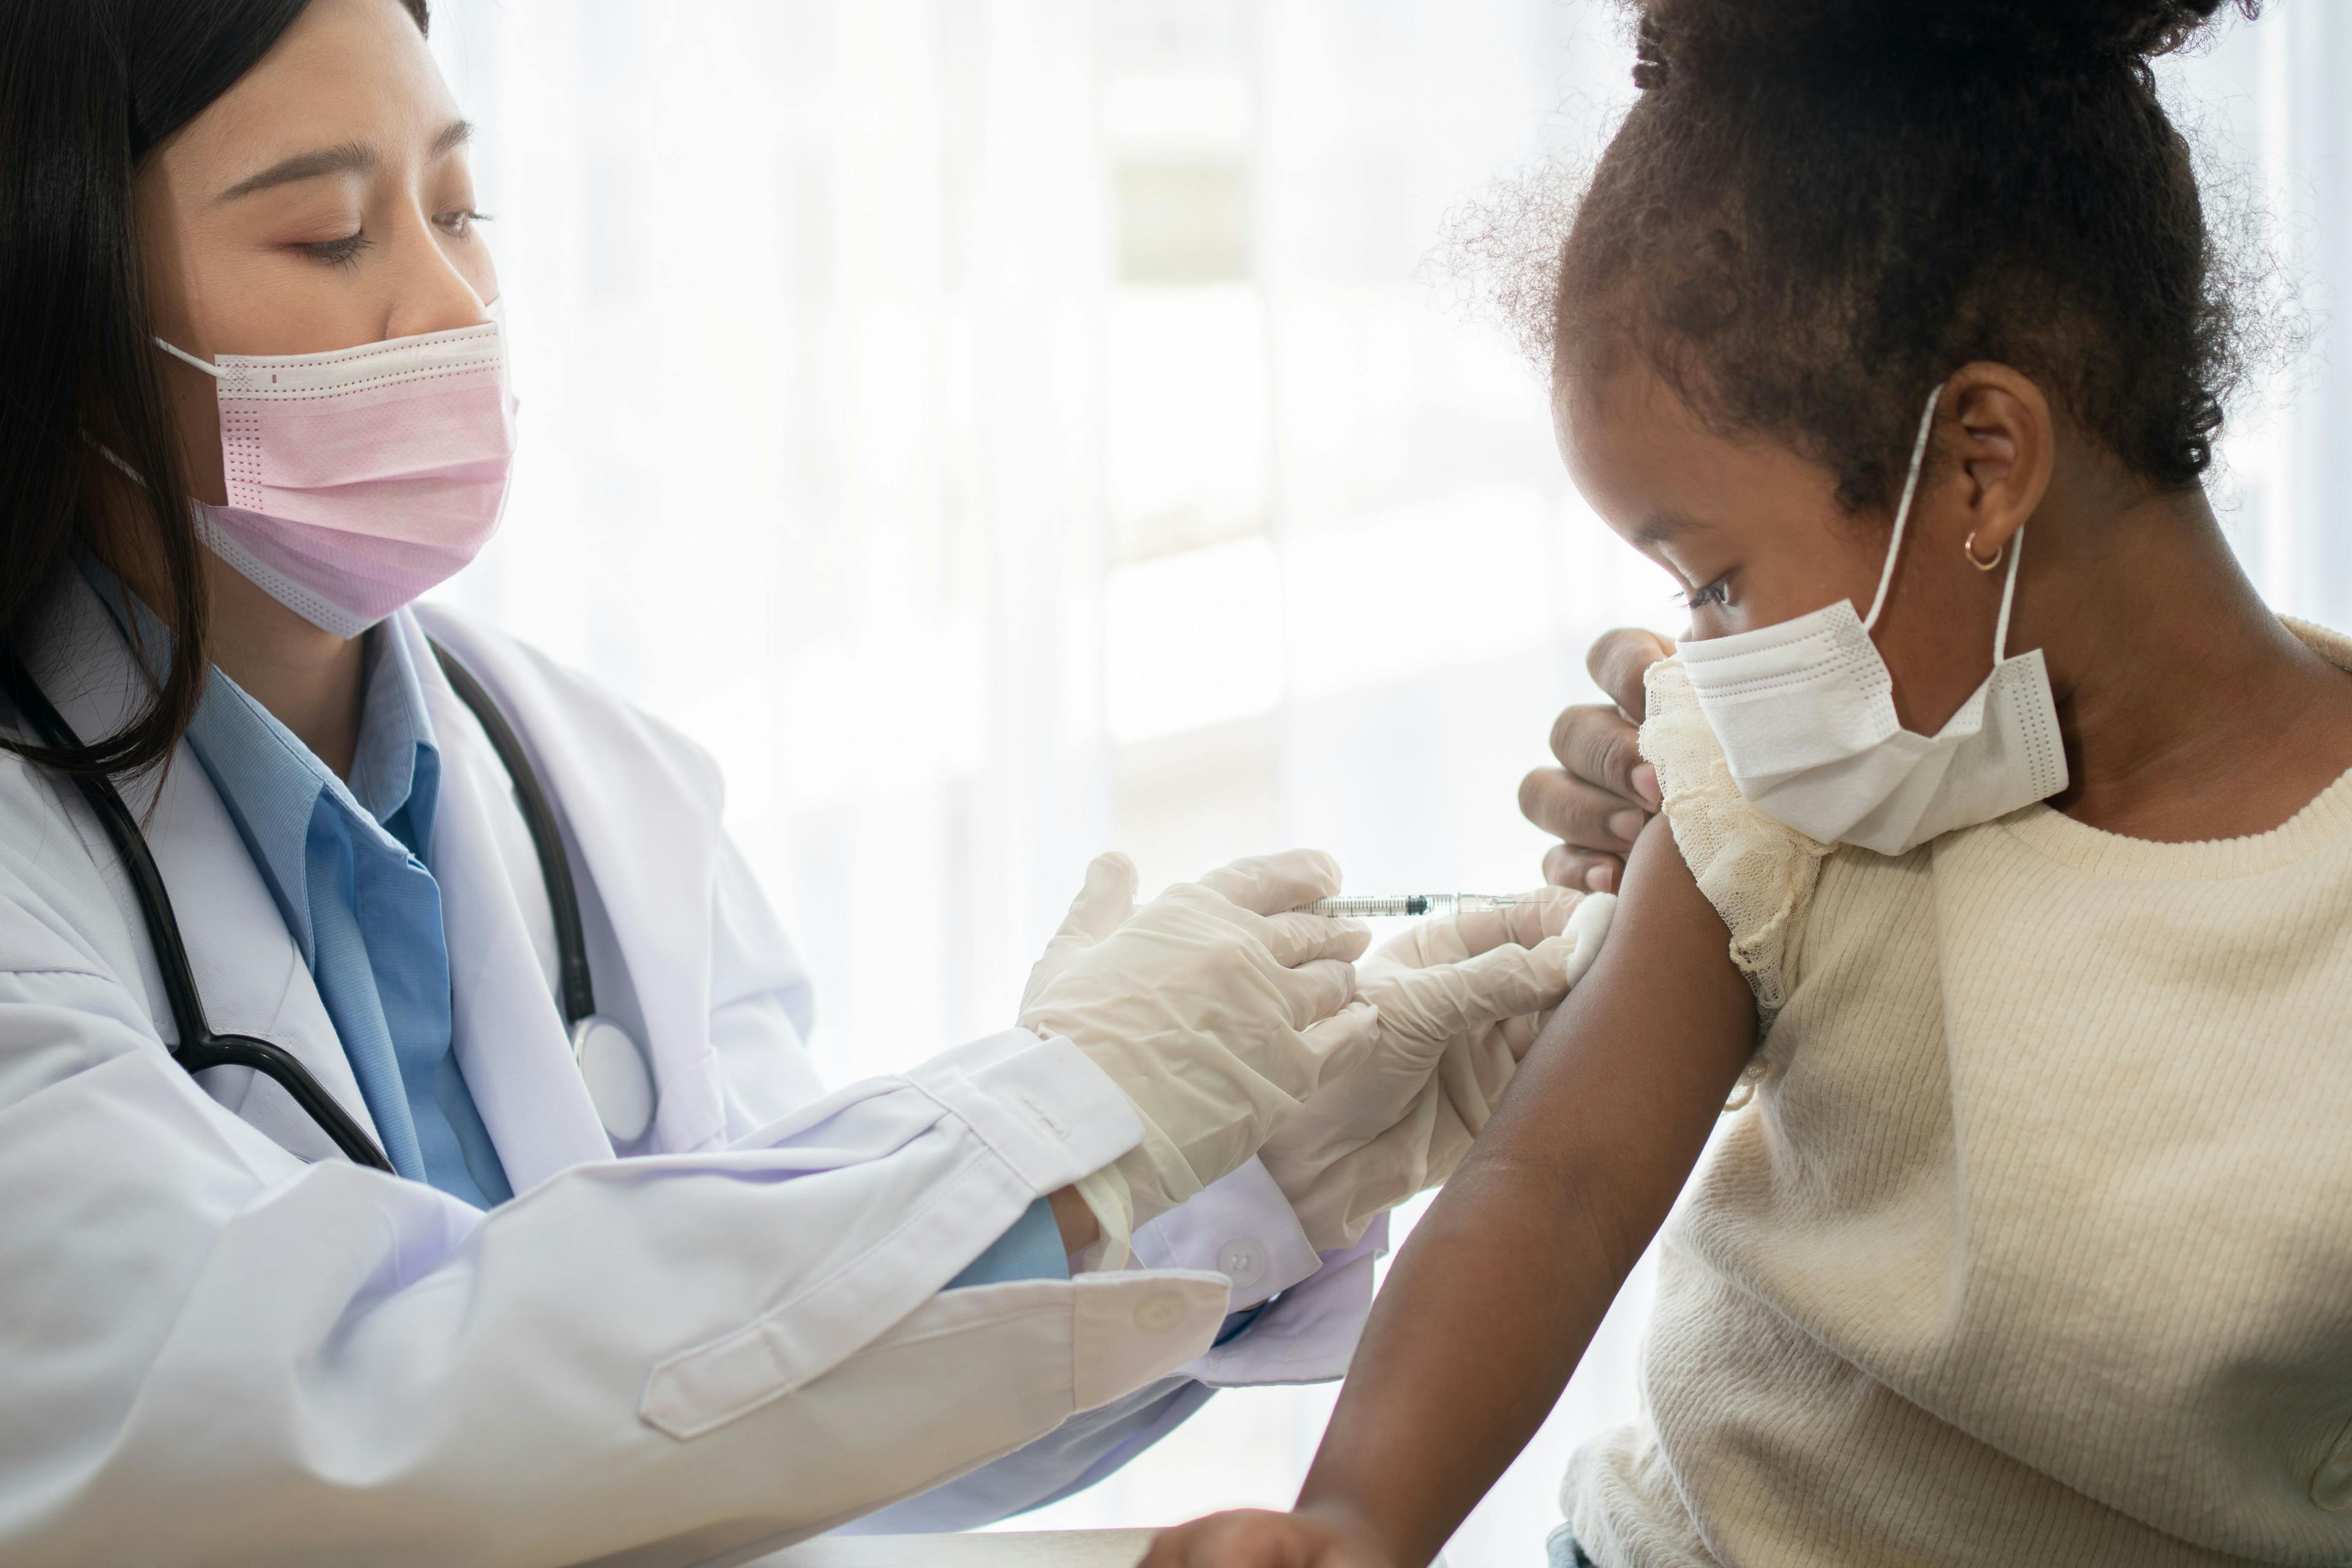 Pfizer Vaccine Efficacy Against Omicron in Children 5-11 Years